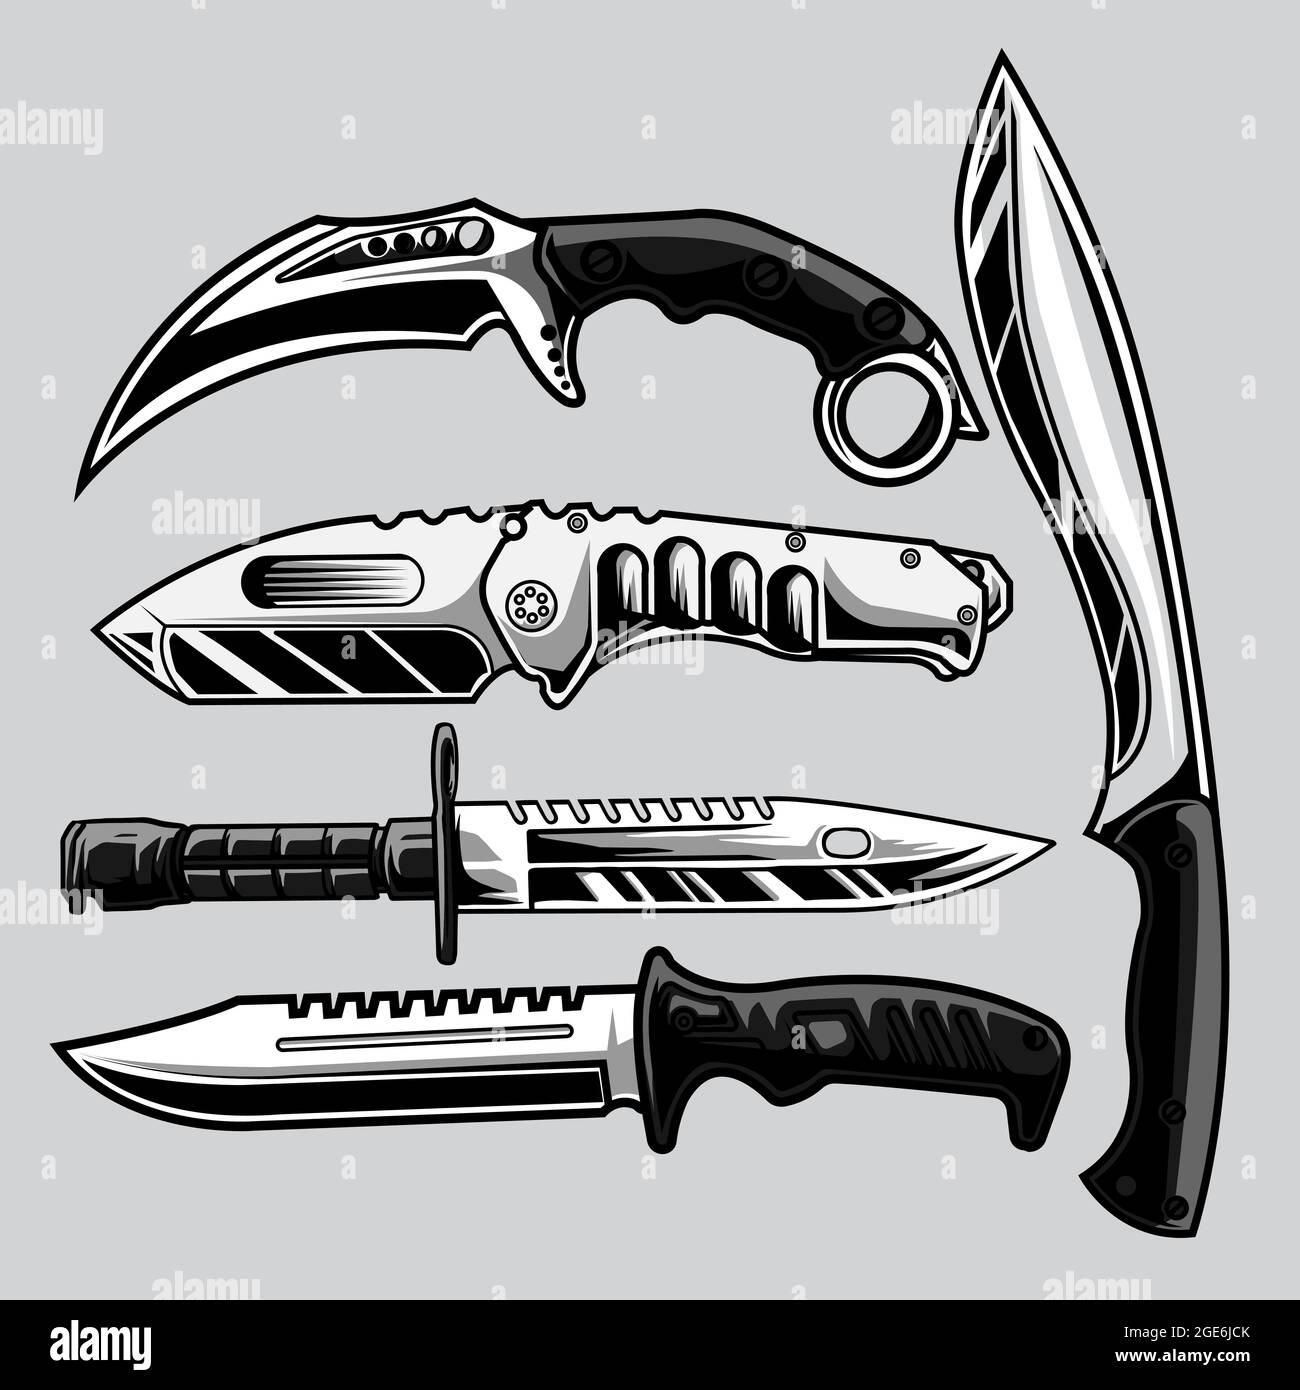 https://c8.alamy.com/comp/2GE6JCK/set-military-knife-on-gray-background-2GE6JCK.jpg